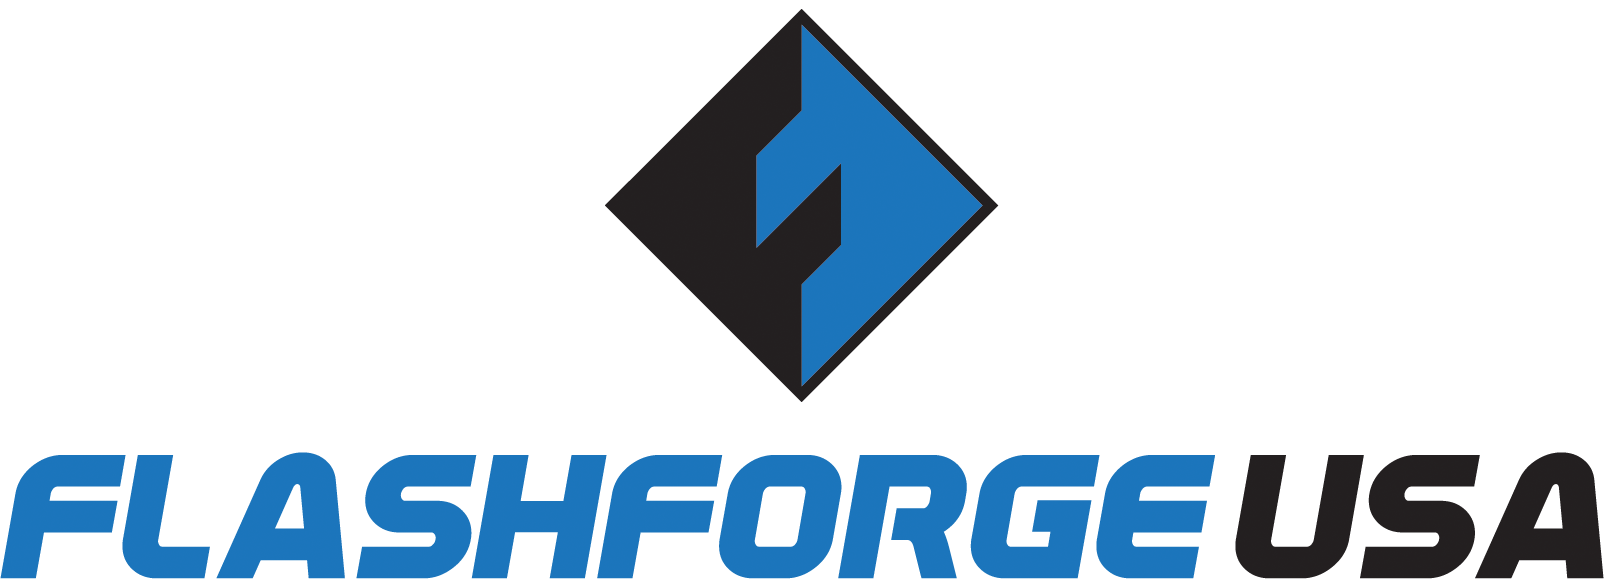 Flash Forge USA logo